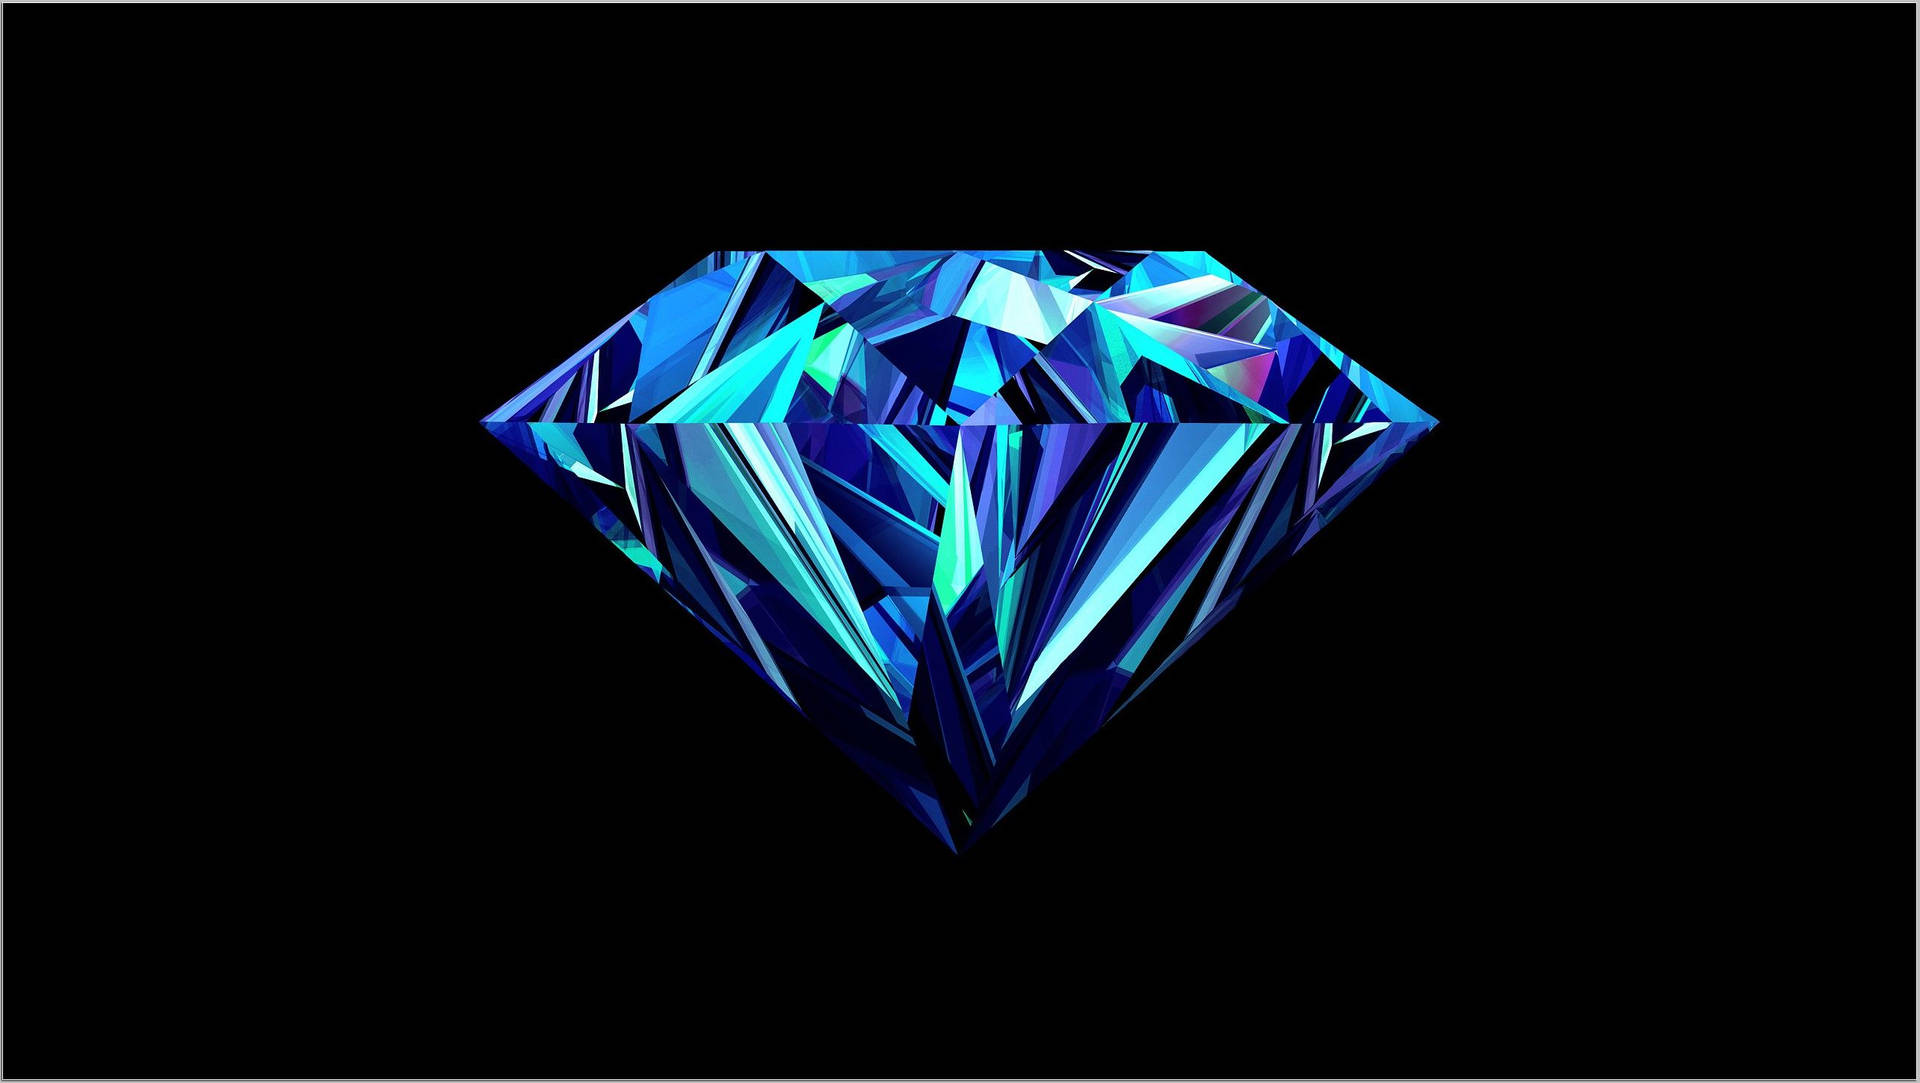 diamond supply co wallpaper blue